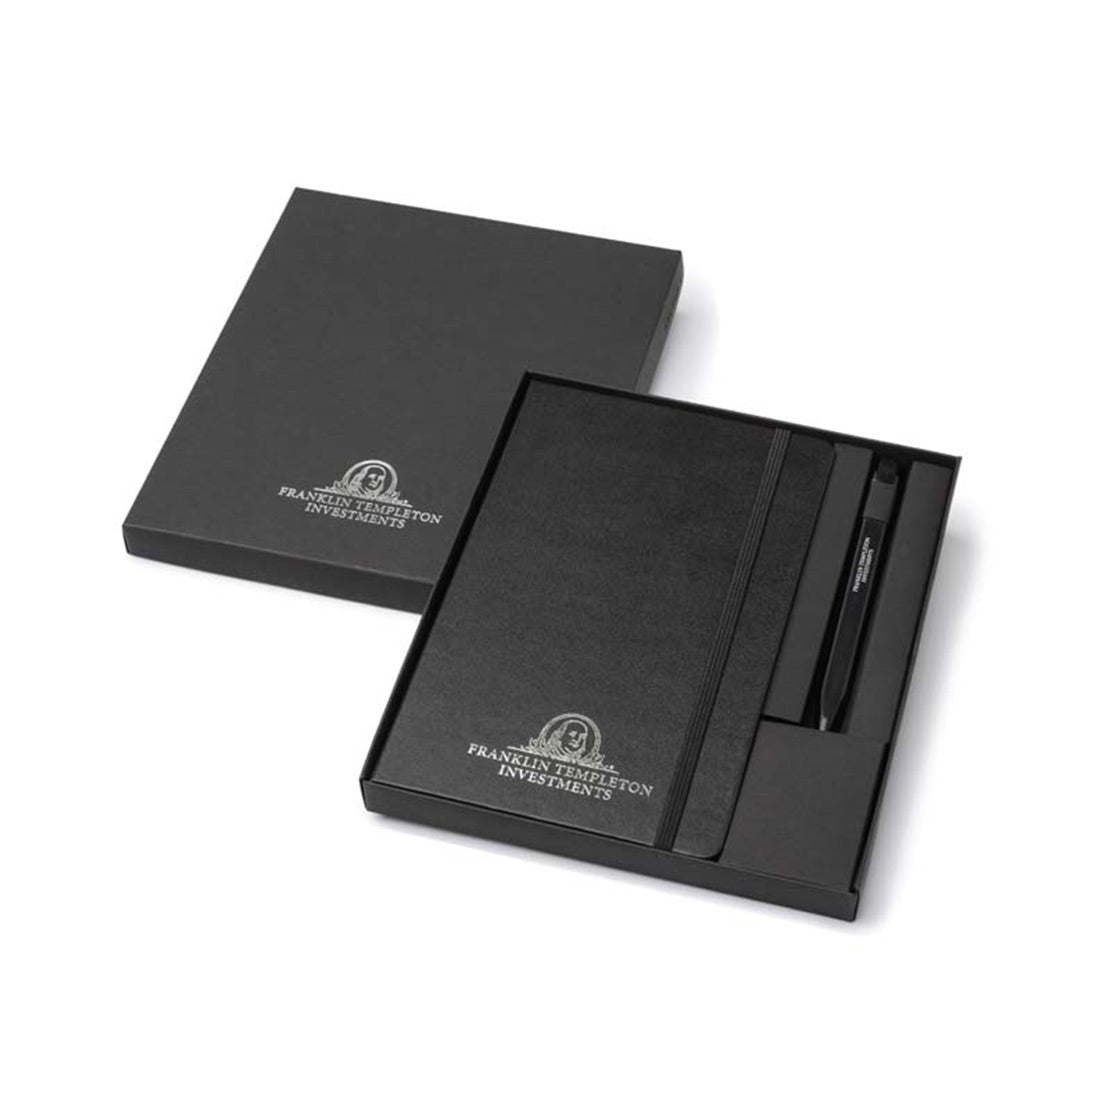 Moleskine Classic Large Notebook Go& Pen Set Black